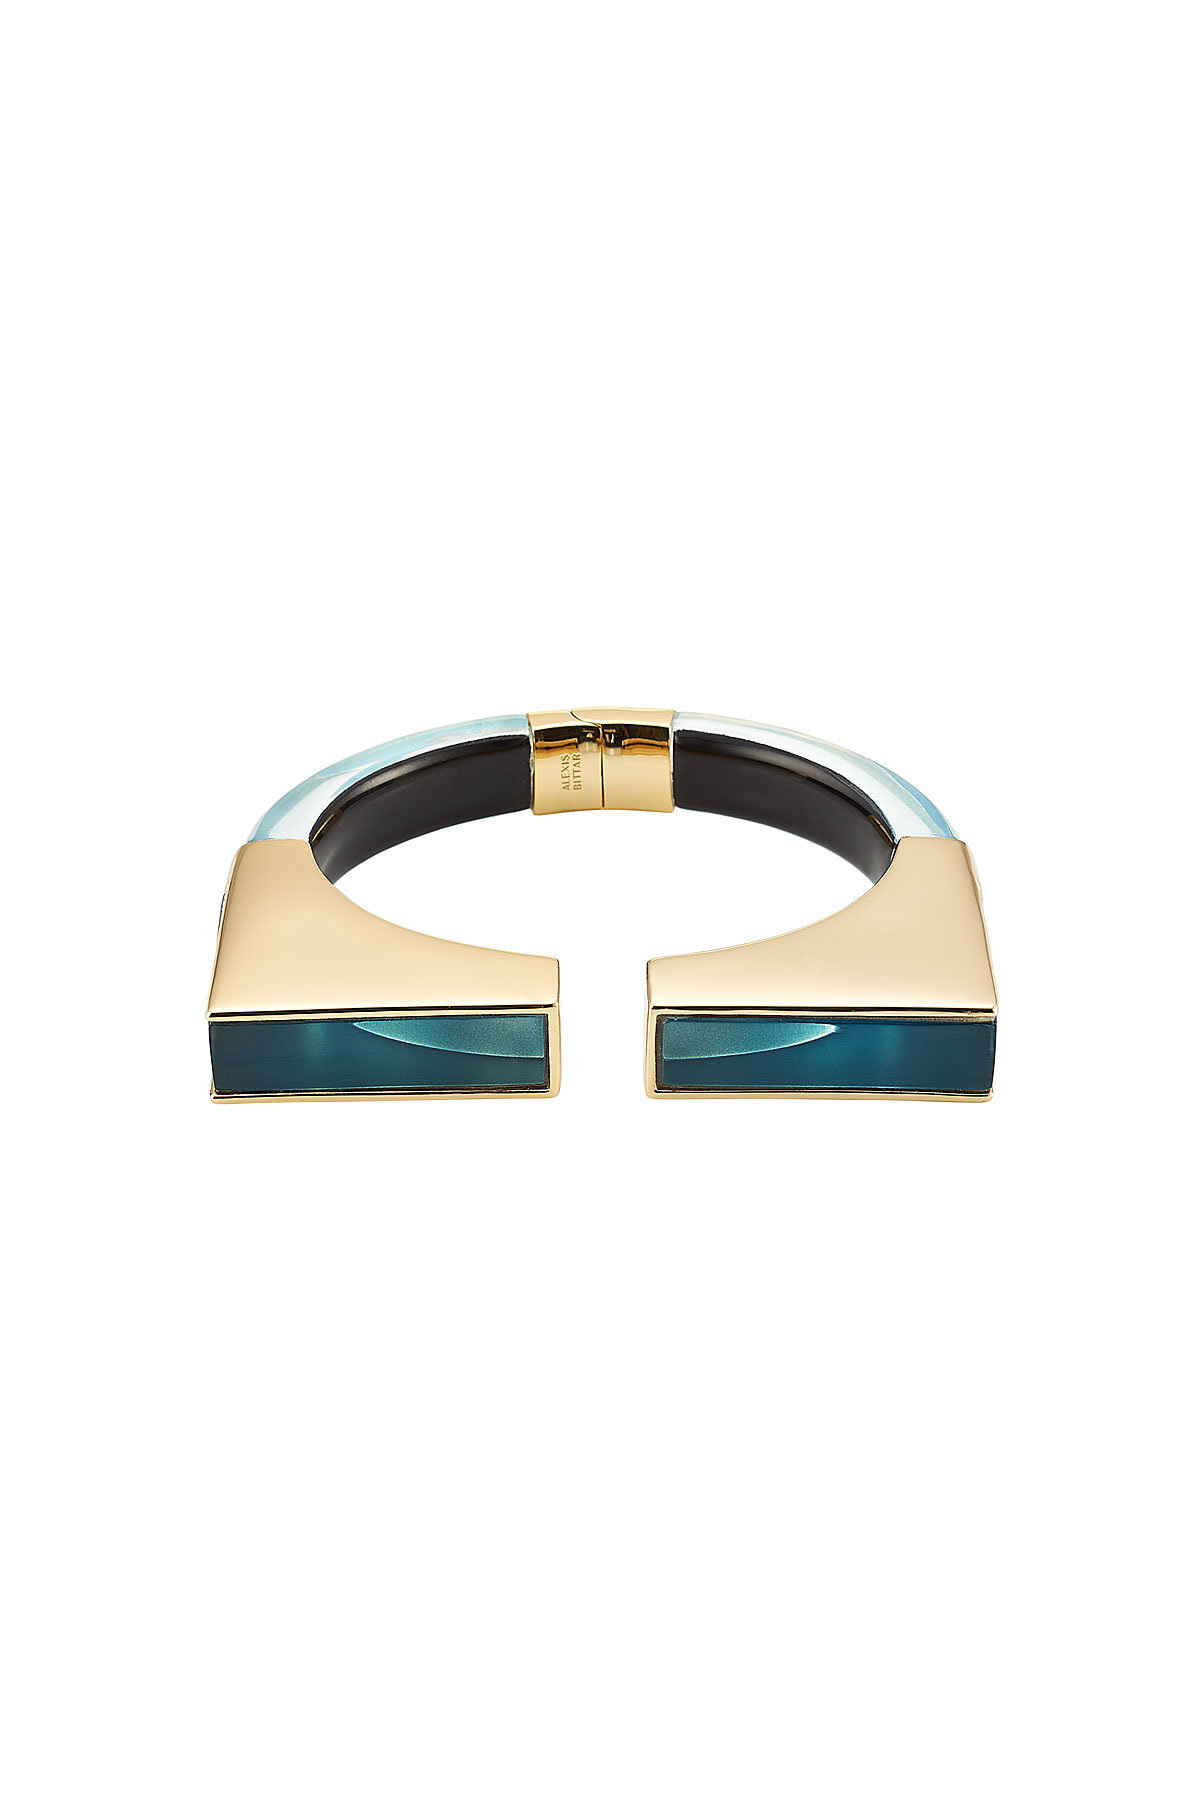 Alexis Bittar - Gold-Plated Bracelet